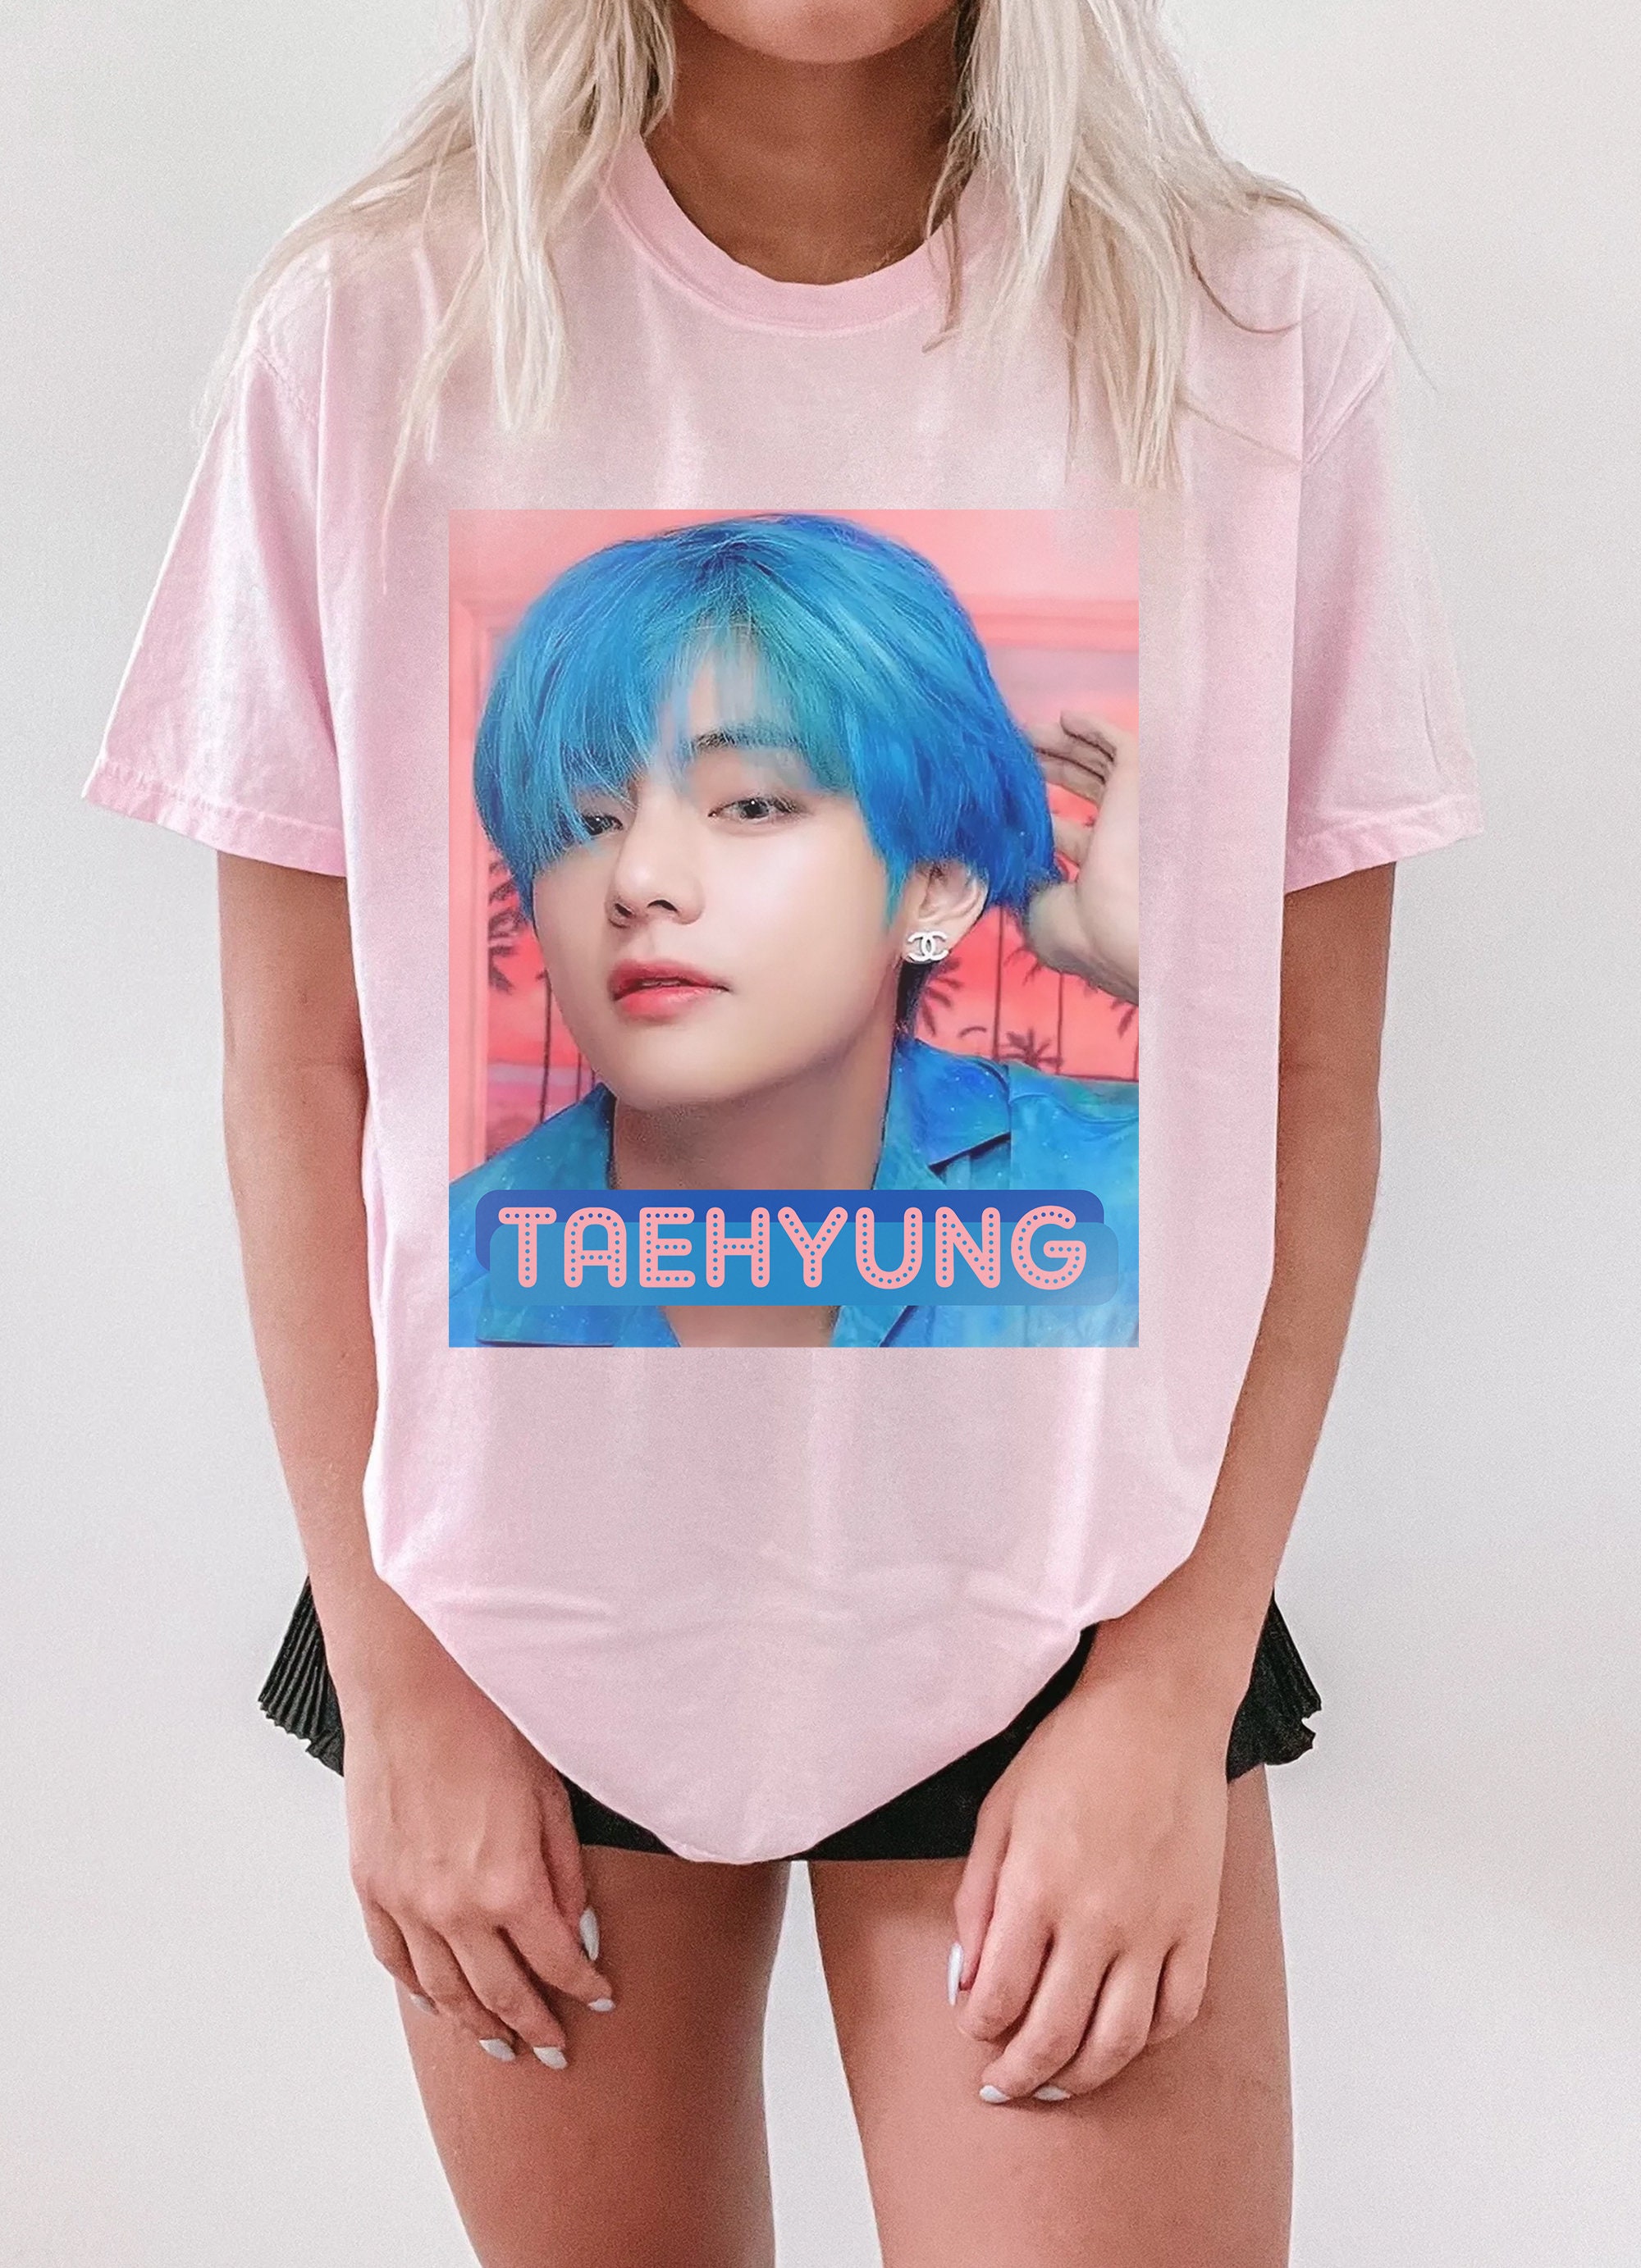 Taehyung Fashion - Etsy